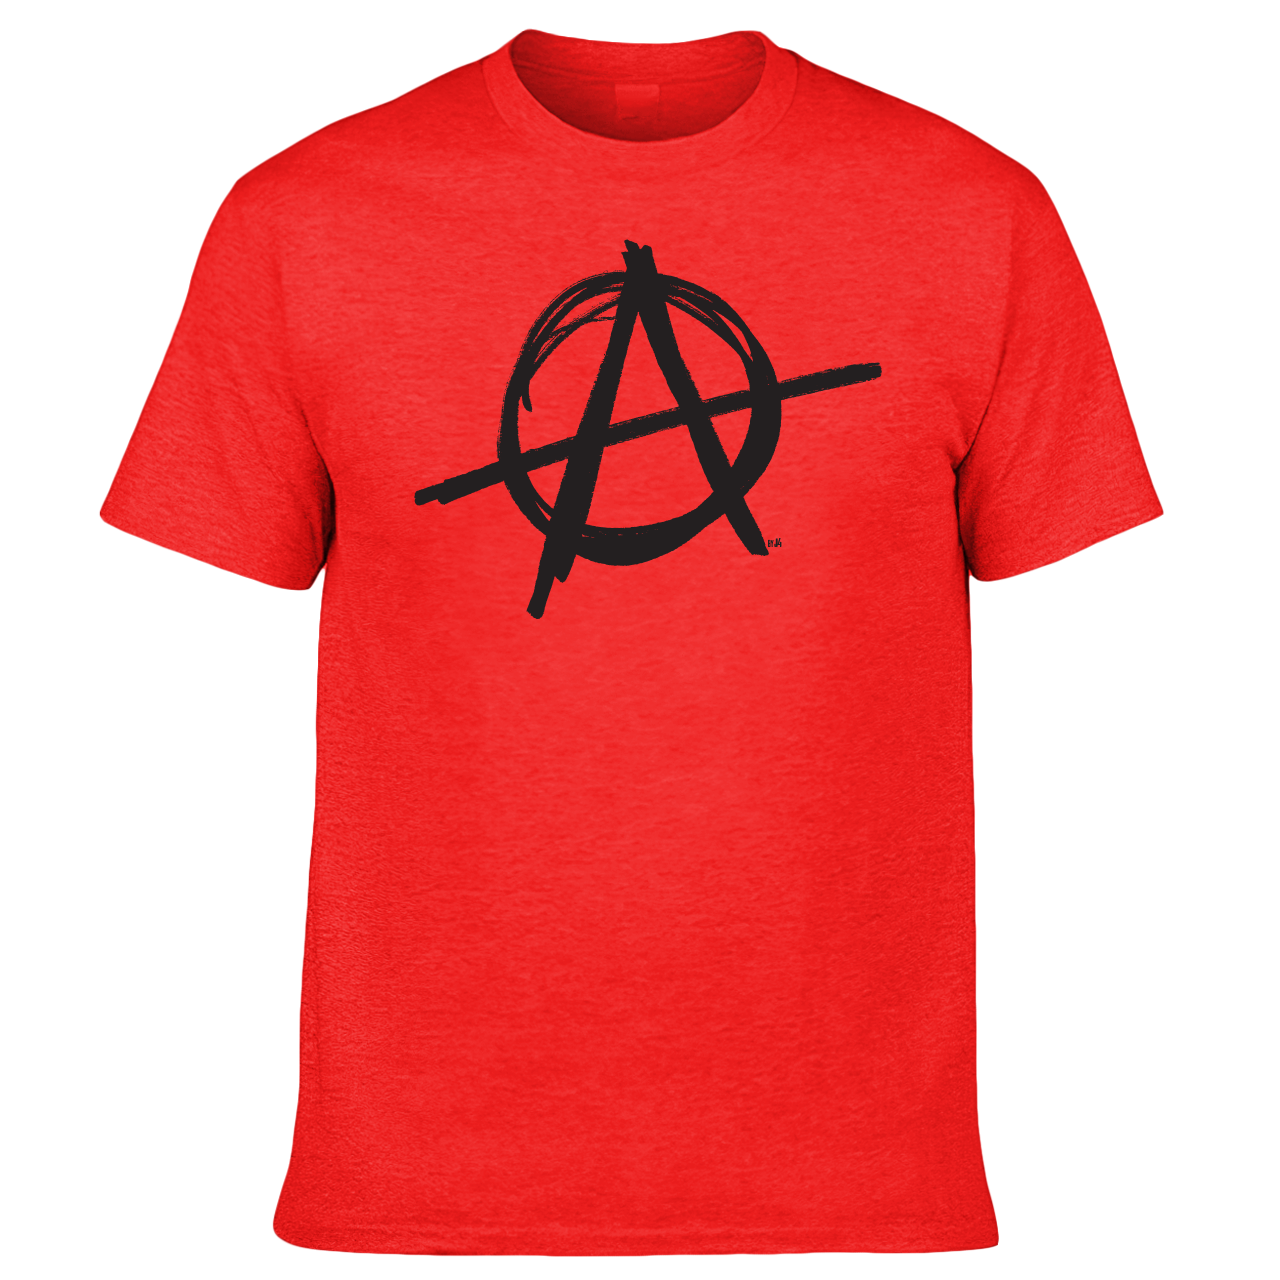 Anarchy - T-shirt - merchadvice